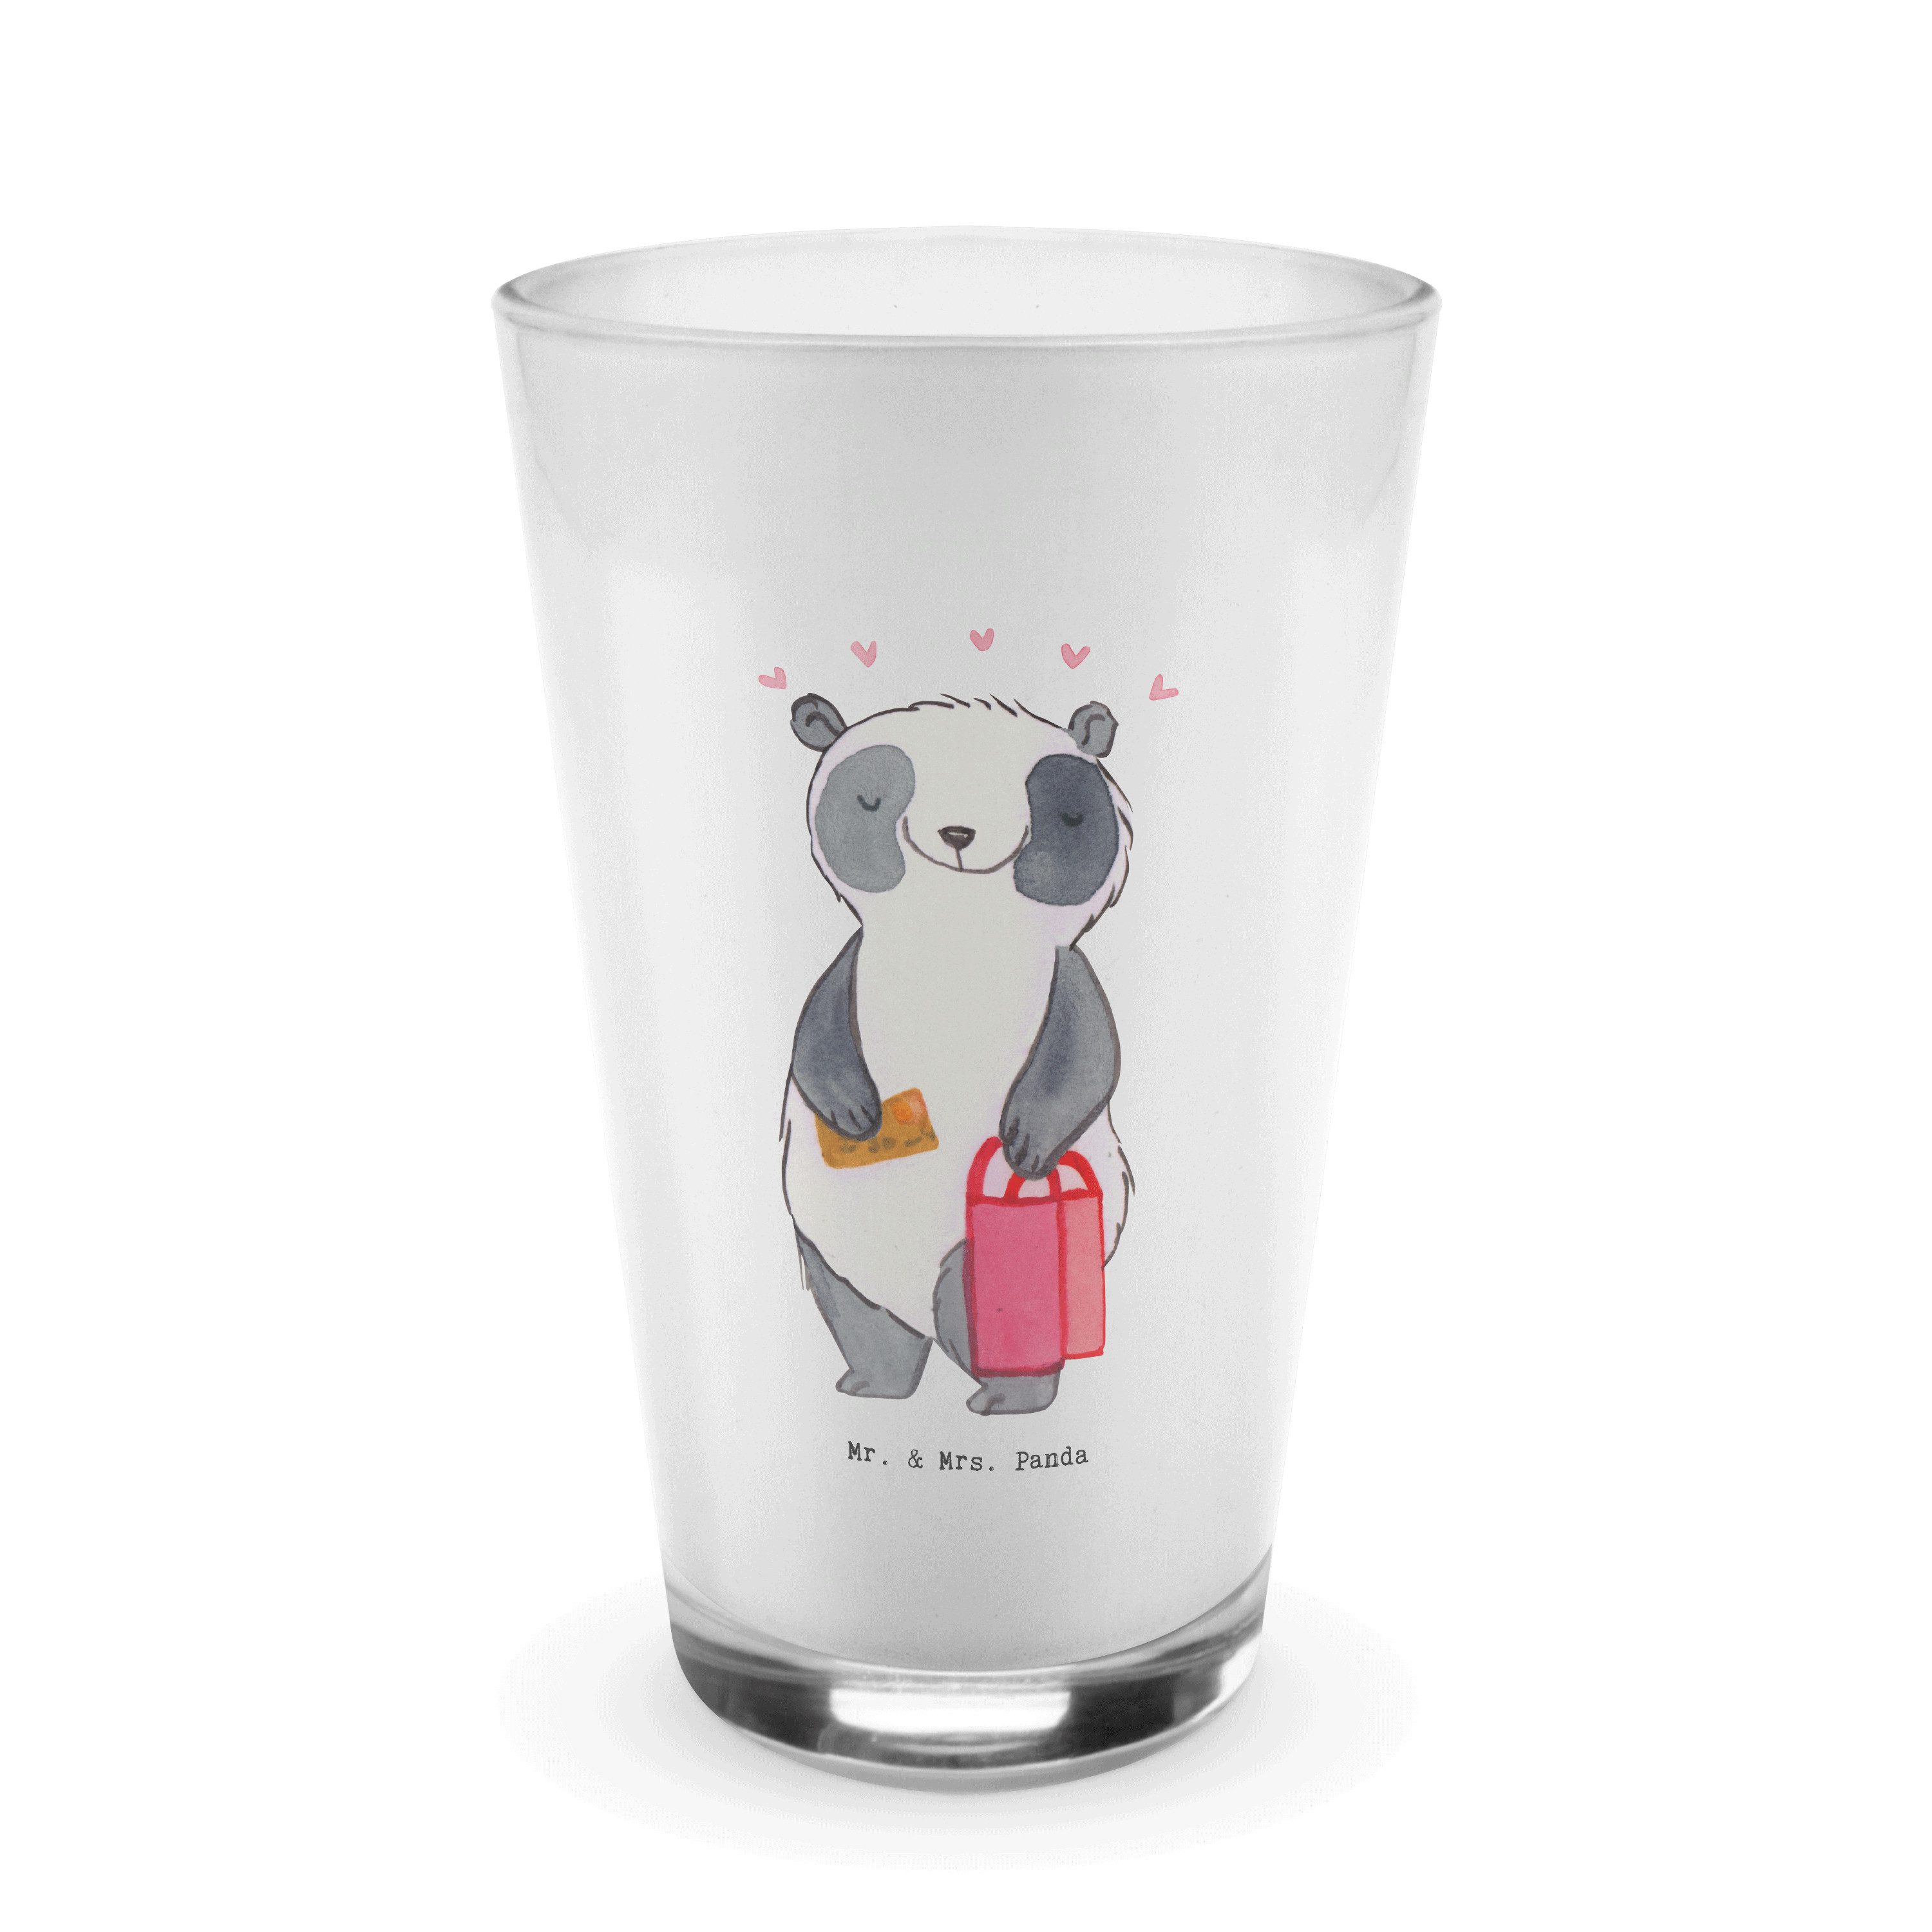 Mr. & Mrs. Panda Glas Panda Shopping - Transparent - Geschenk, Glas, Hobby, Sport, Danke, C, Premium Glas, Edles Matt-Design